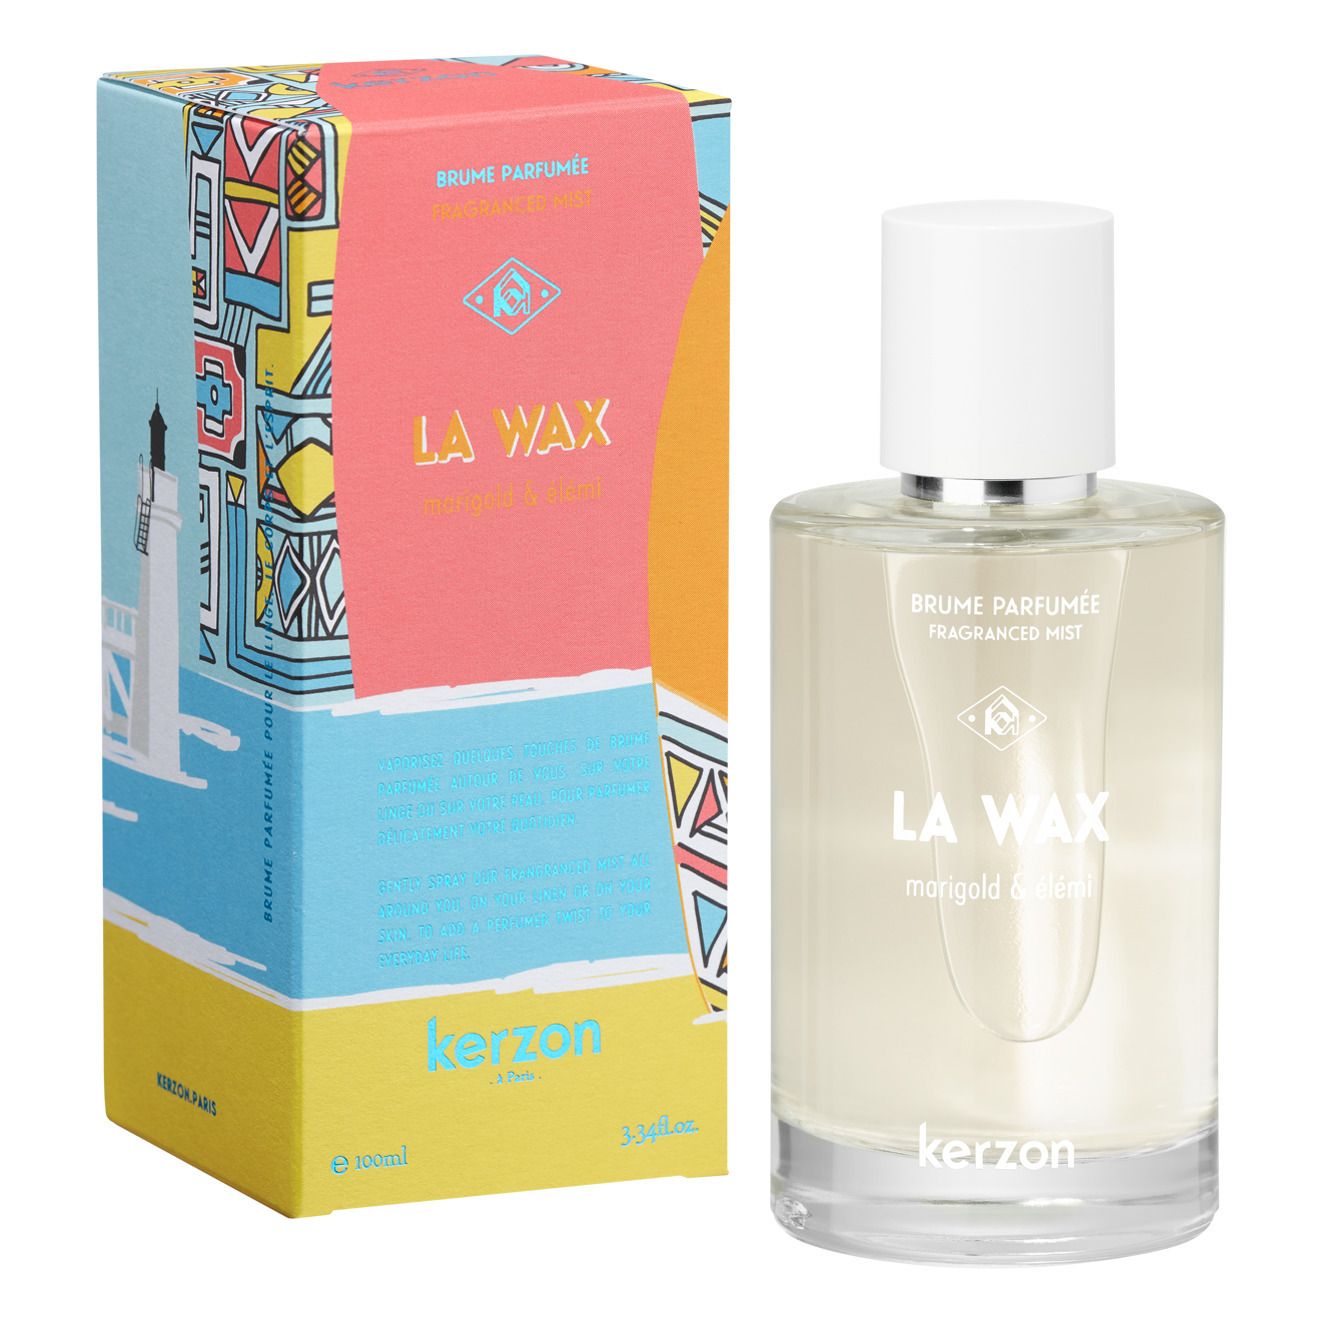 Kerzon - Brume parfumée - La wax - 100 ml - Transparent